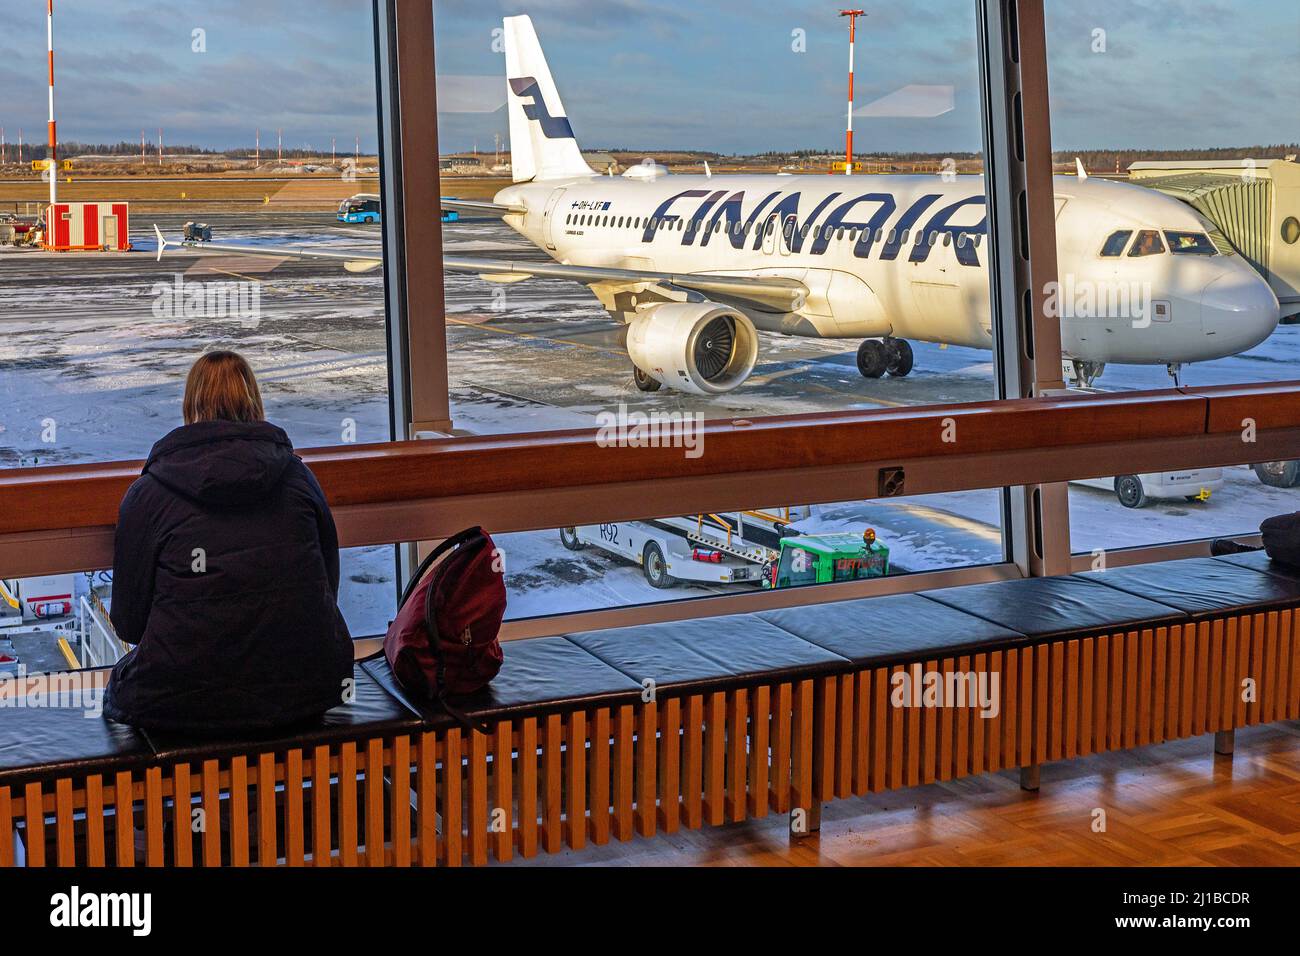 FINNAIR PLANE ON THE TARMAC AT THE HELSINKI AIRPORT, HELSINKI, FINLAND, EUROPE Stock Photo